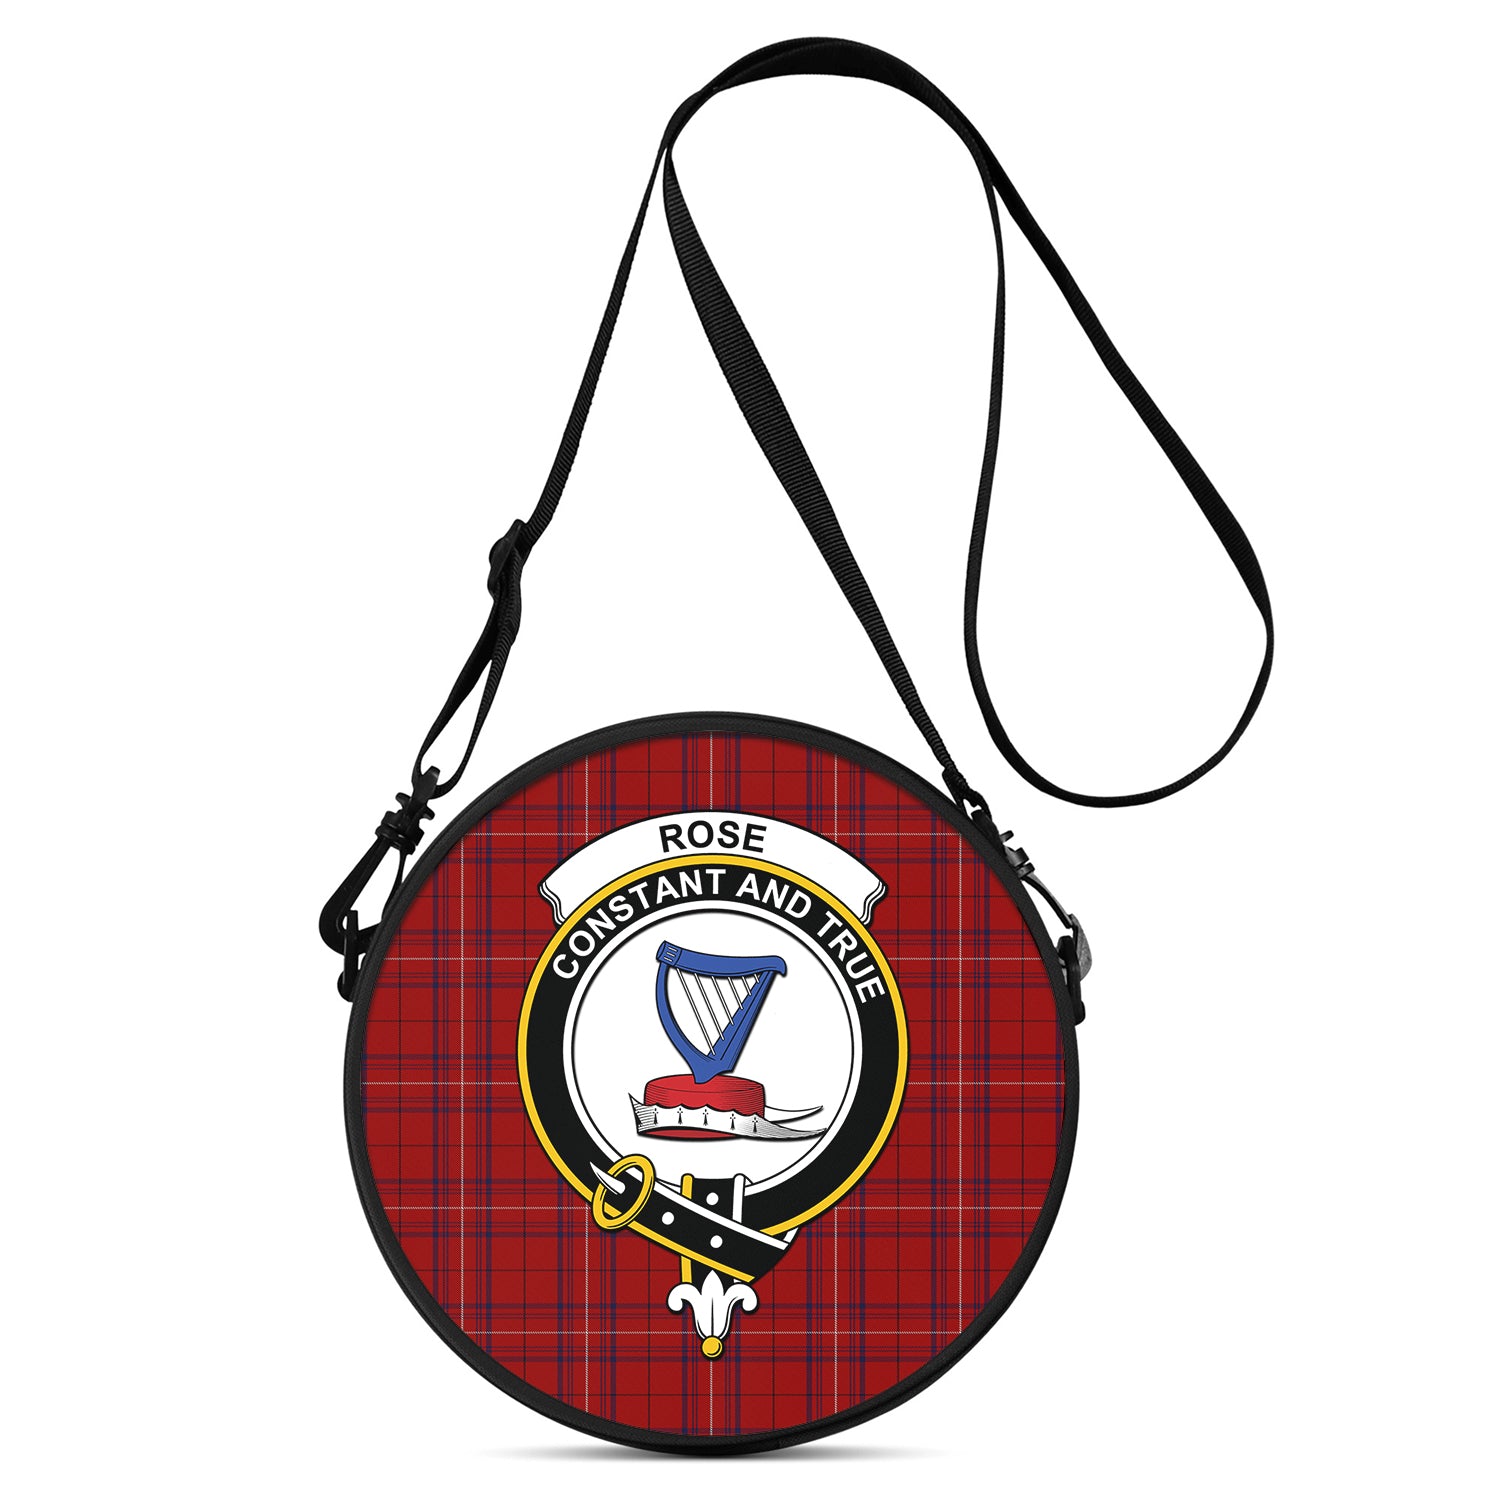 rose-of-kilravock-tartan-round-satchel-bags-with-family-crest